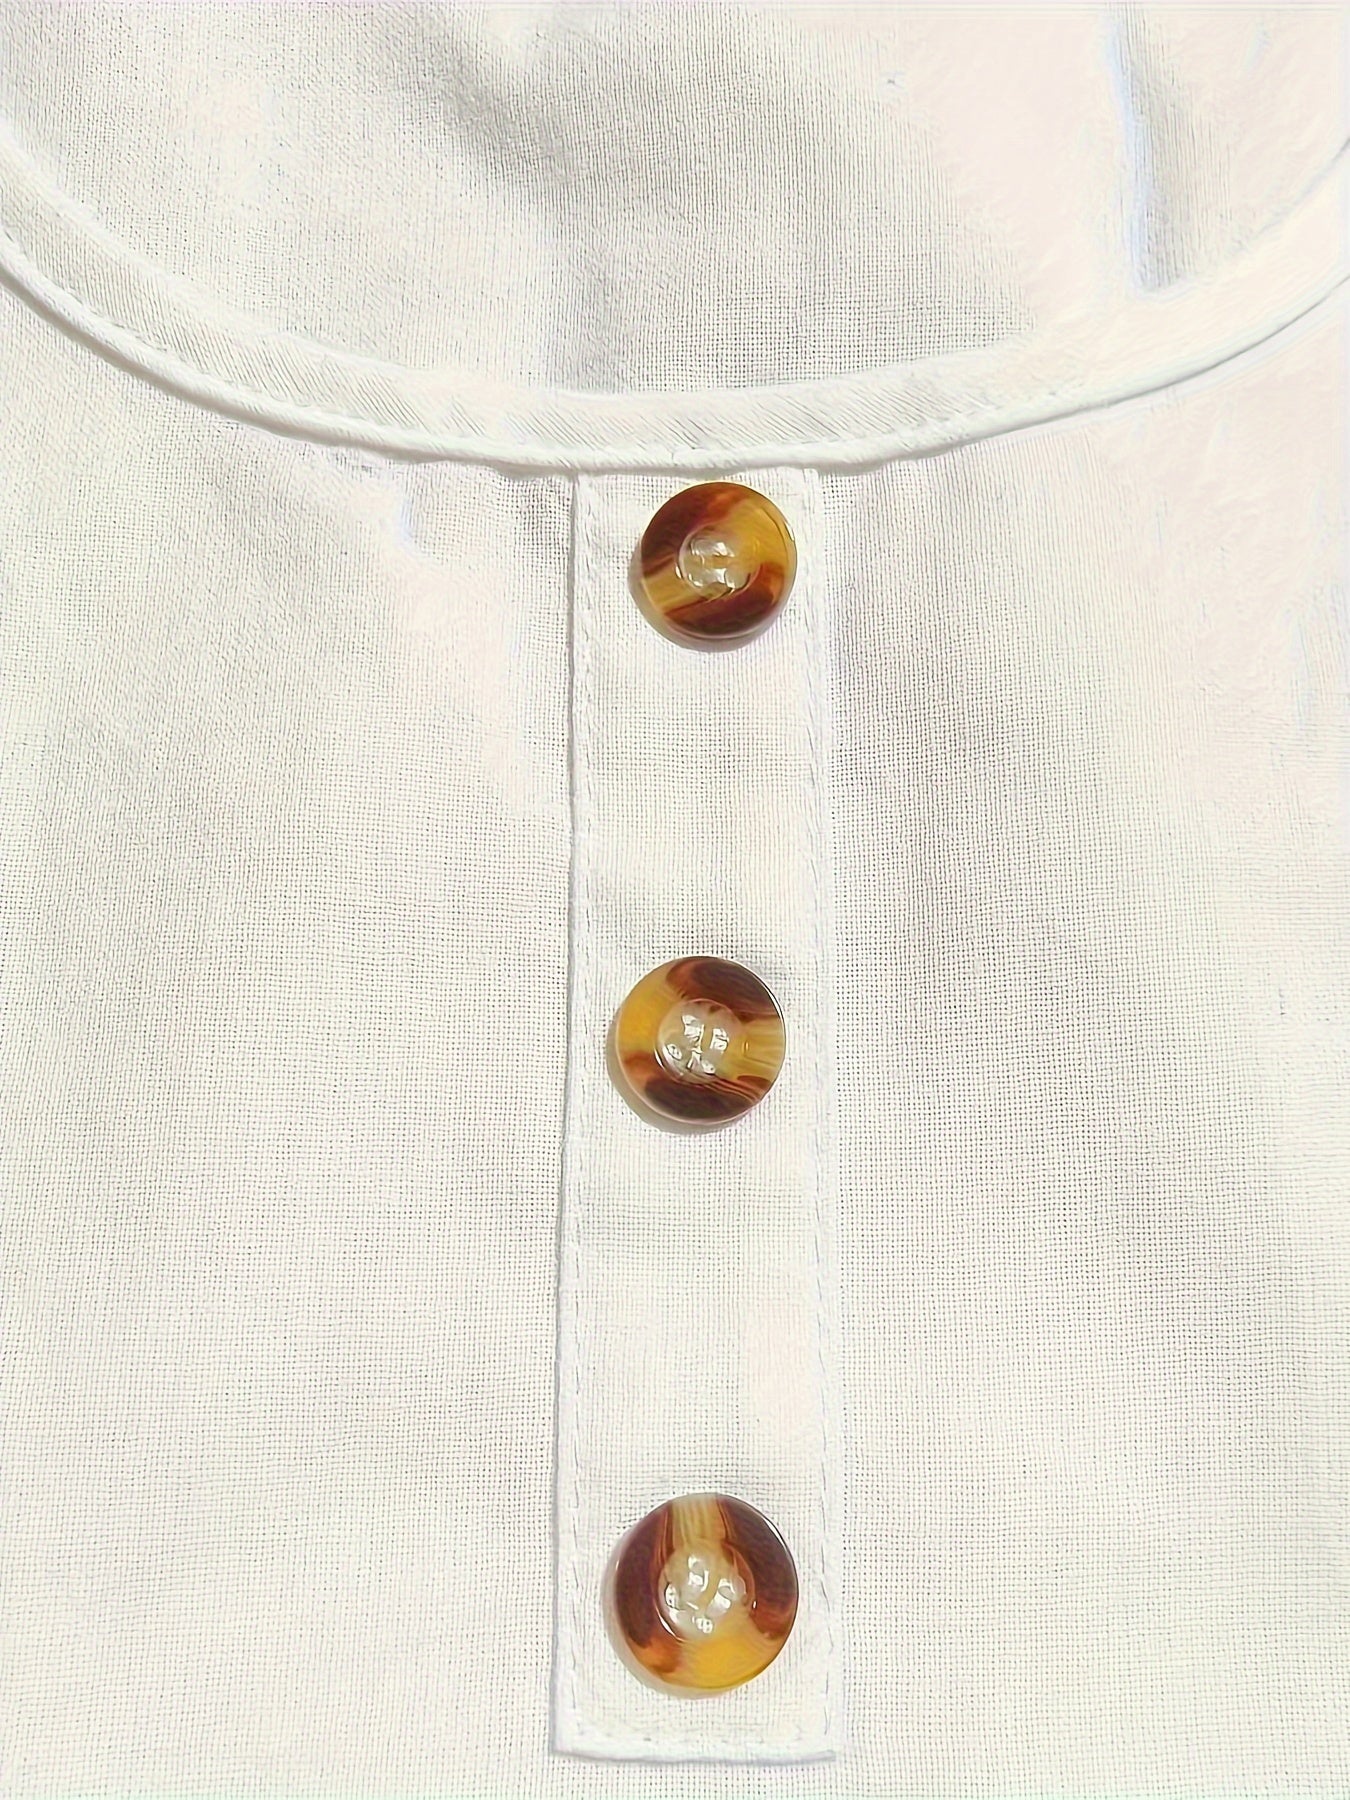 White Cotton Button Top, Elegant Cotton Top For Spring and Summer, White Cotton Top For Women